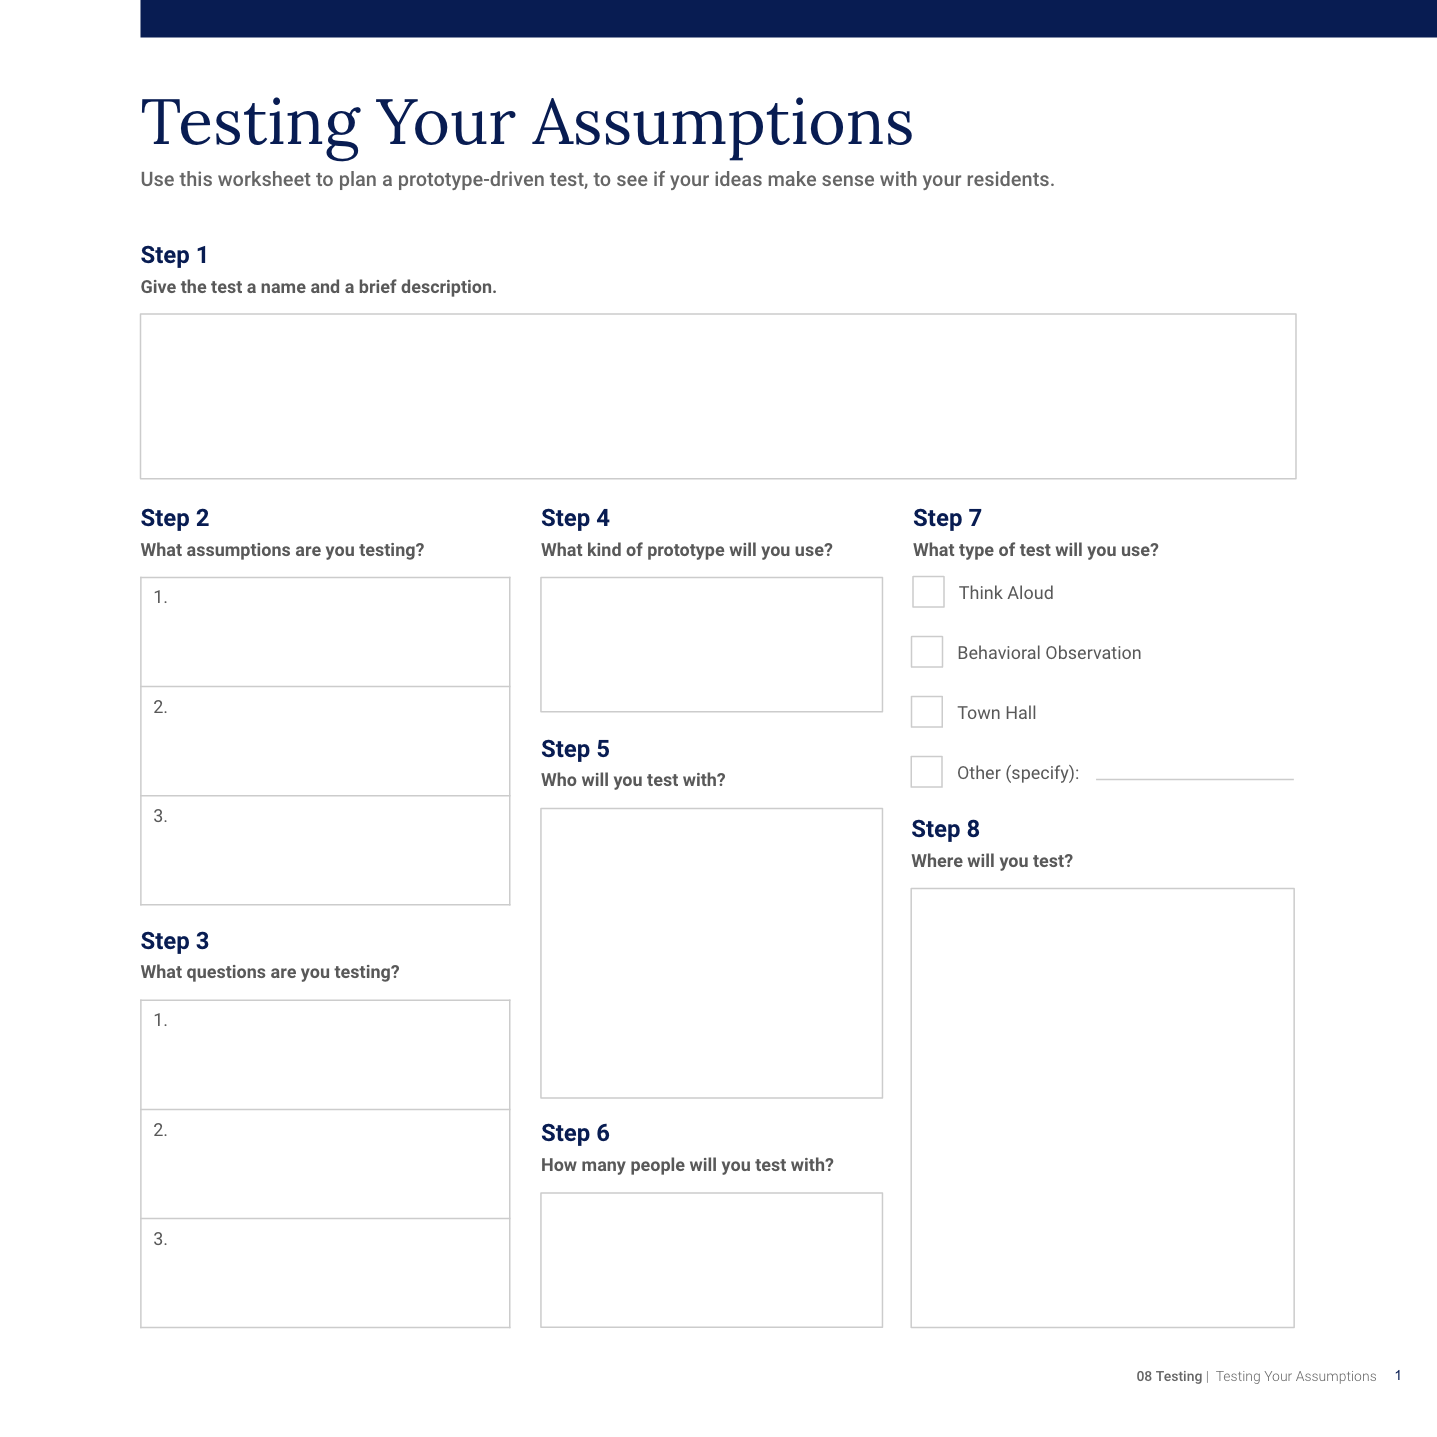 image of testing assumptions worksheet